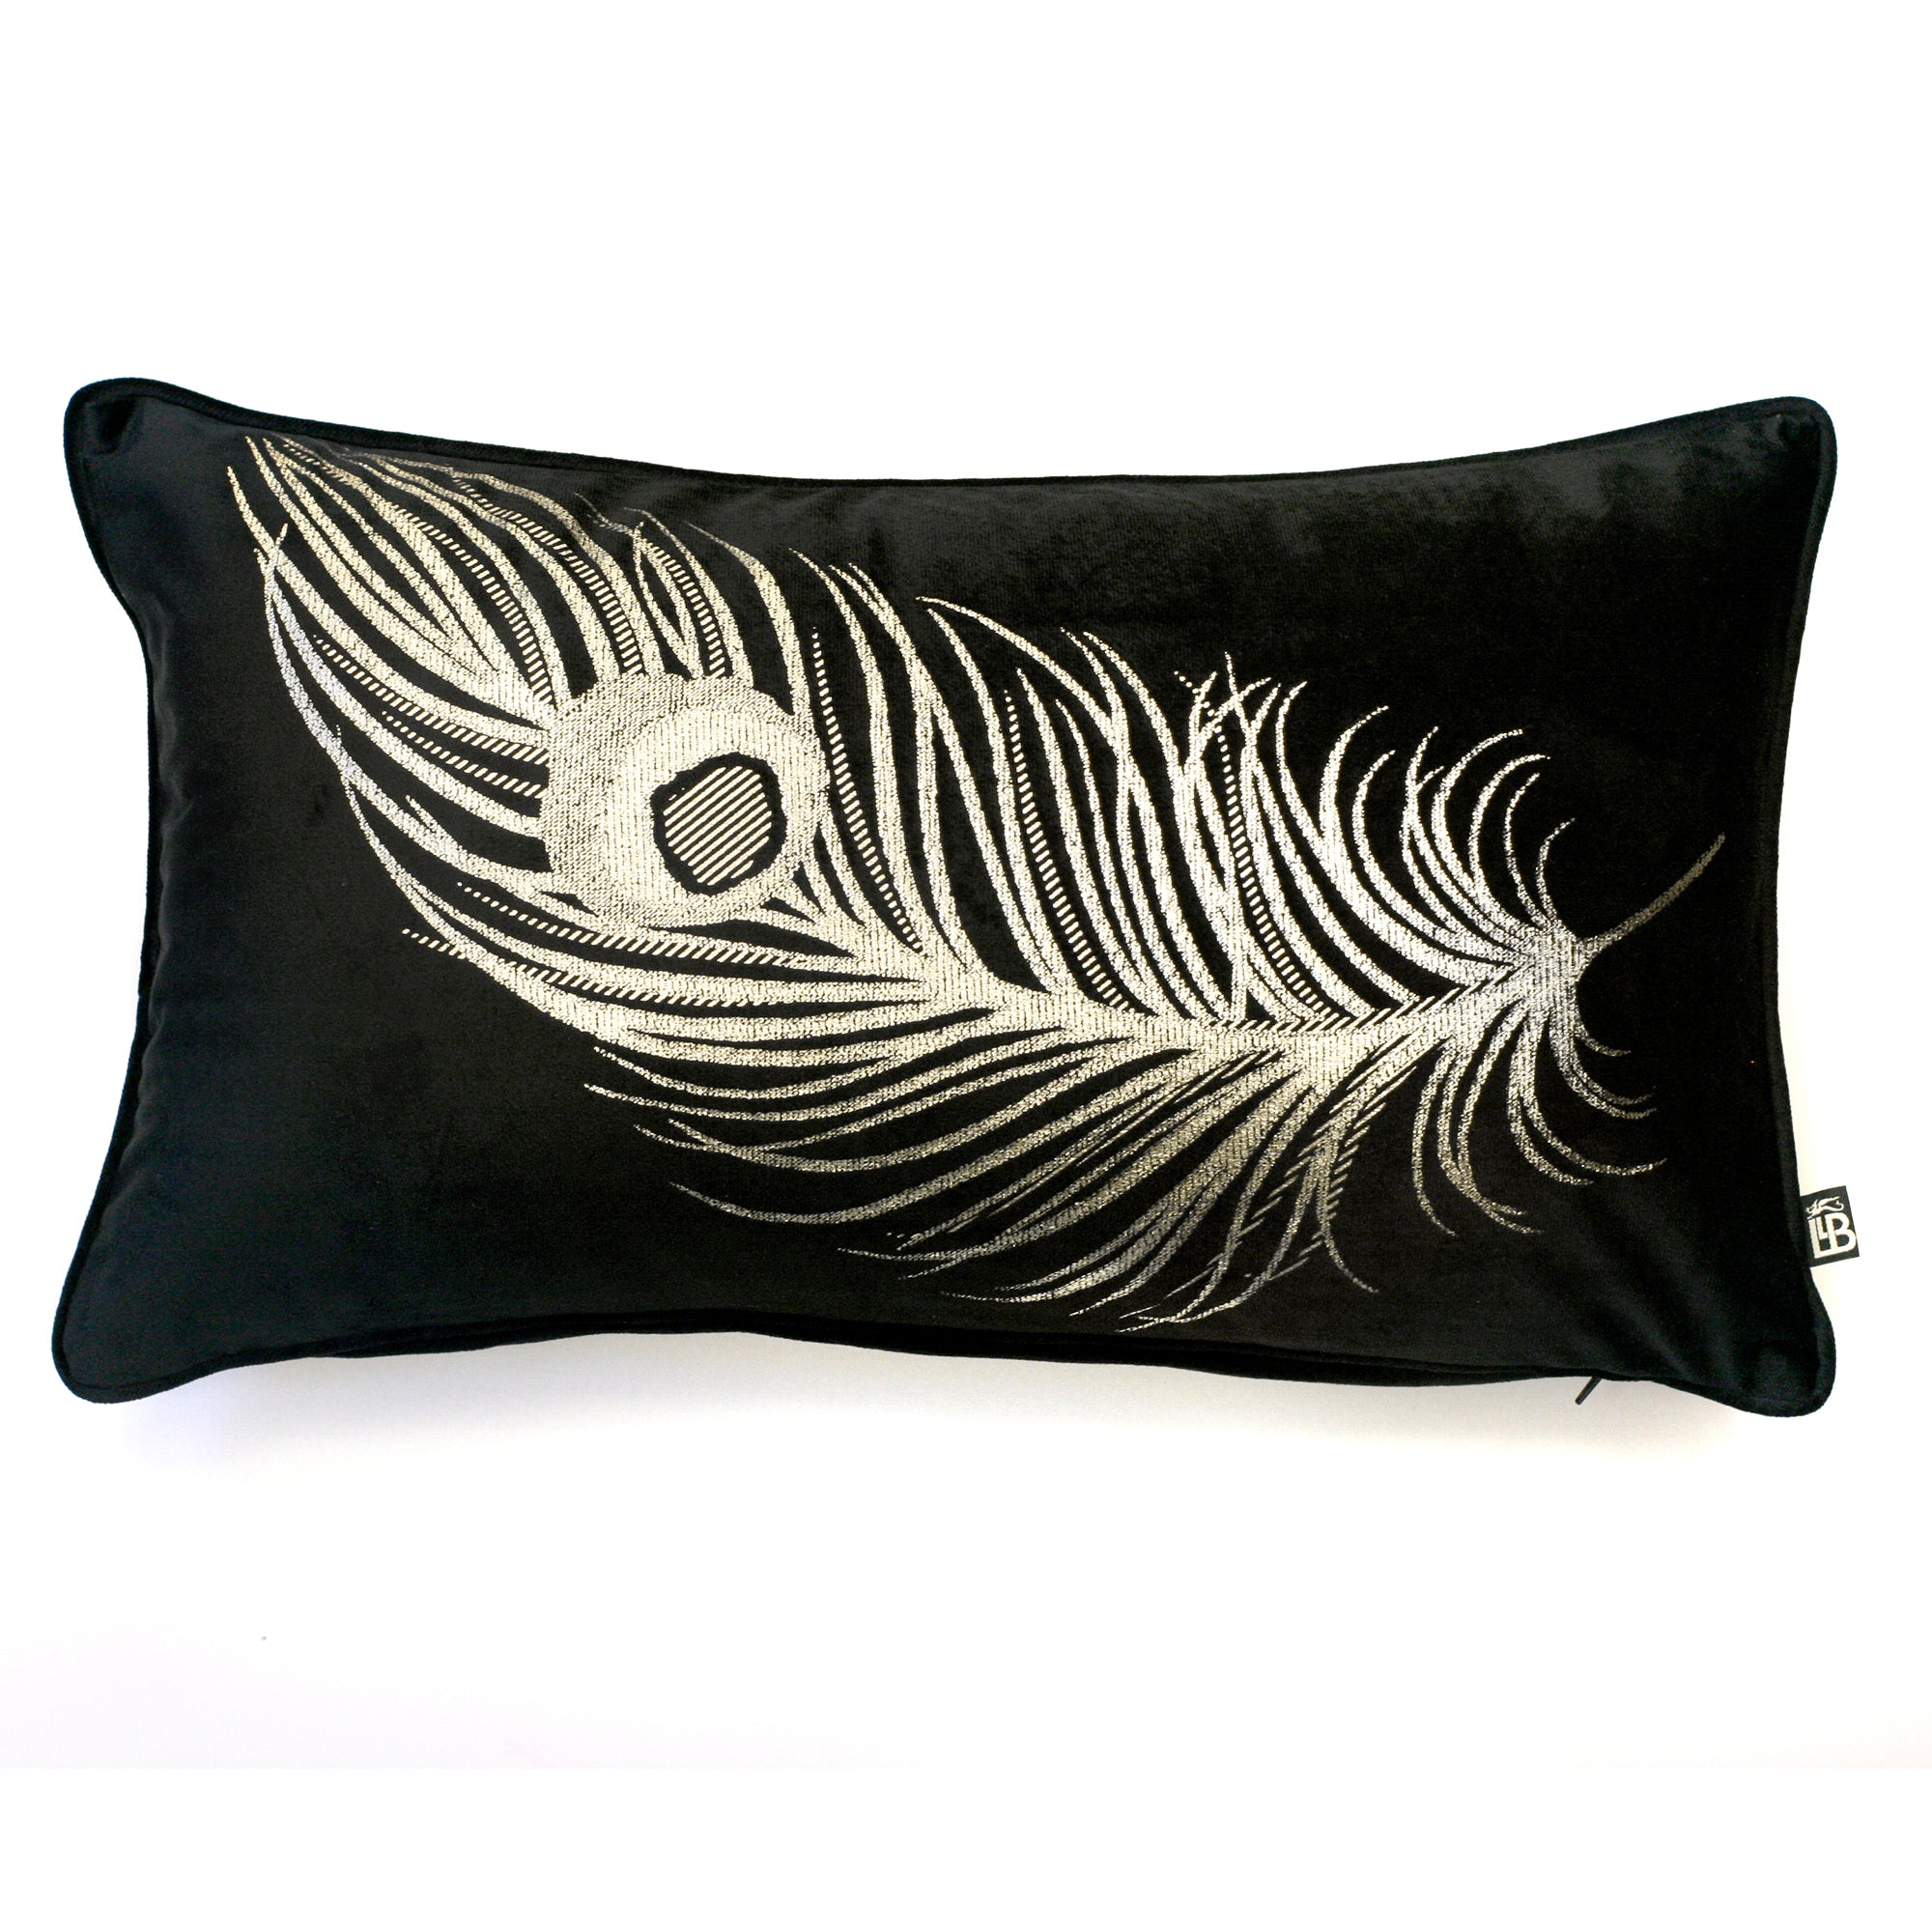 Dandy - Luxury Velvet Filled Cushion by Laurence Llewelyn-Bowen